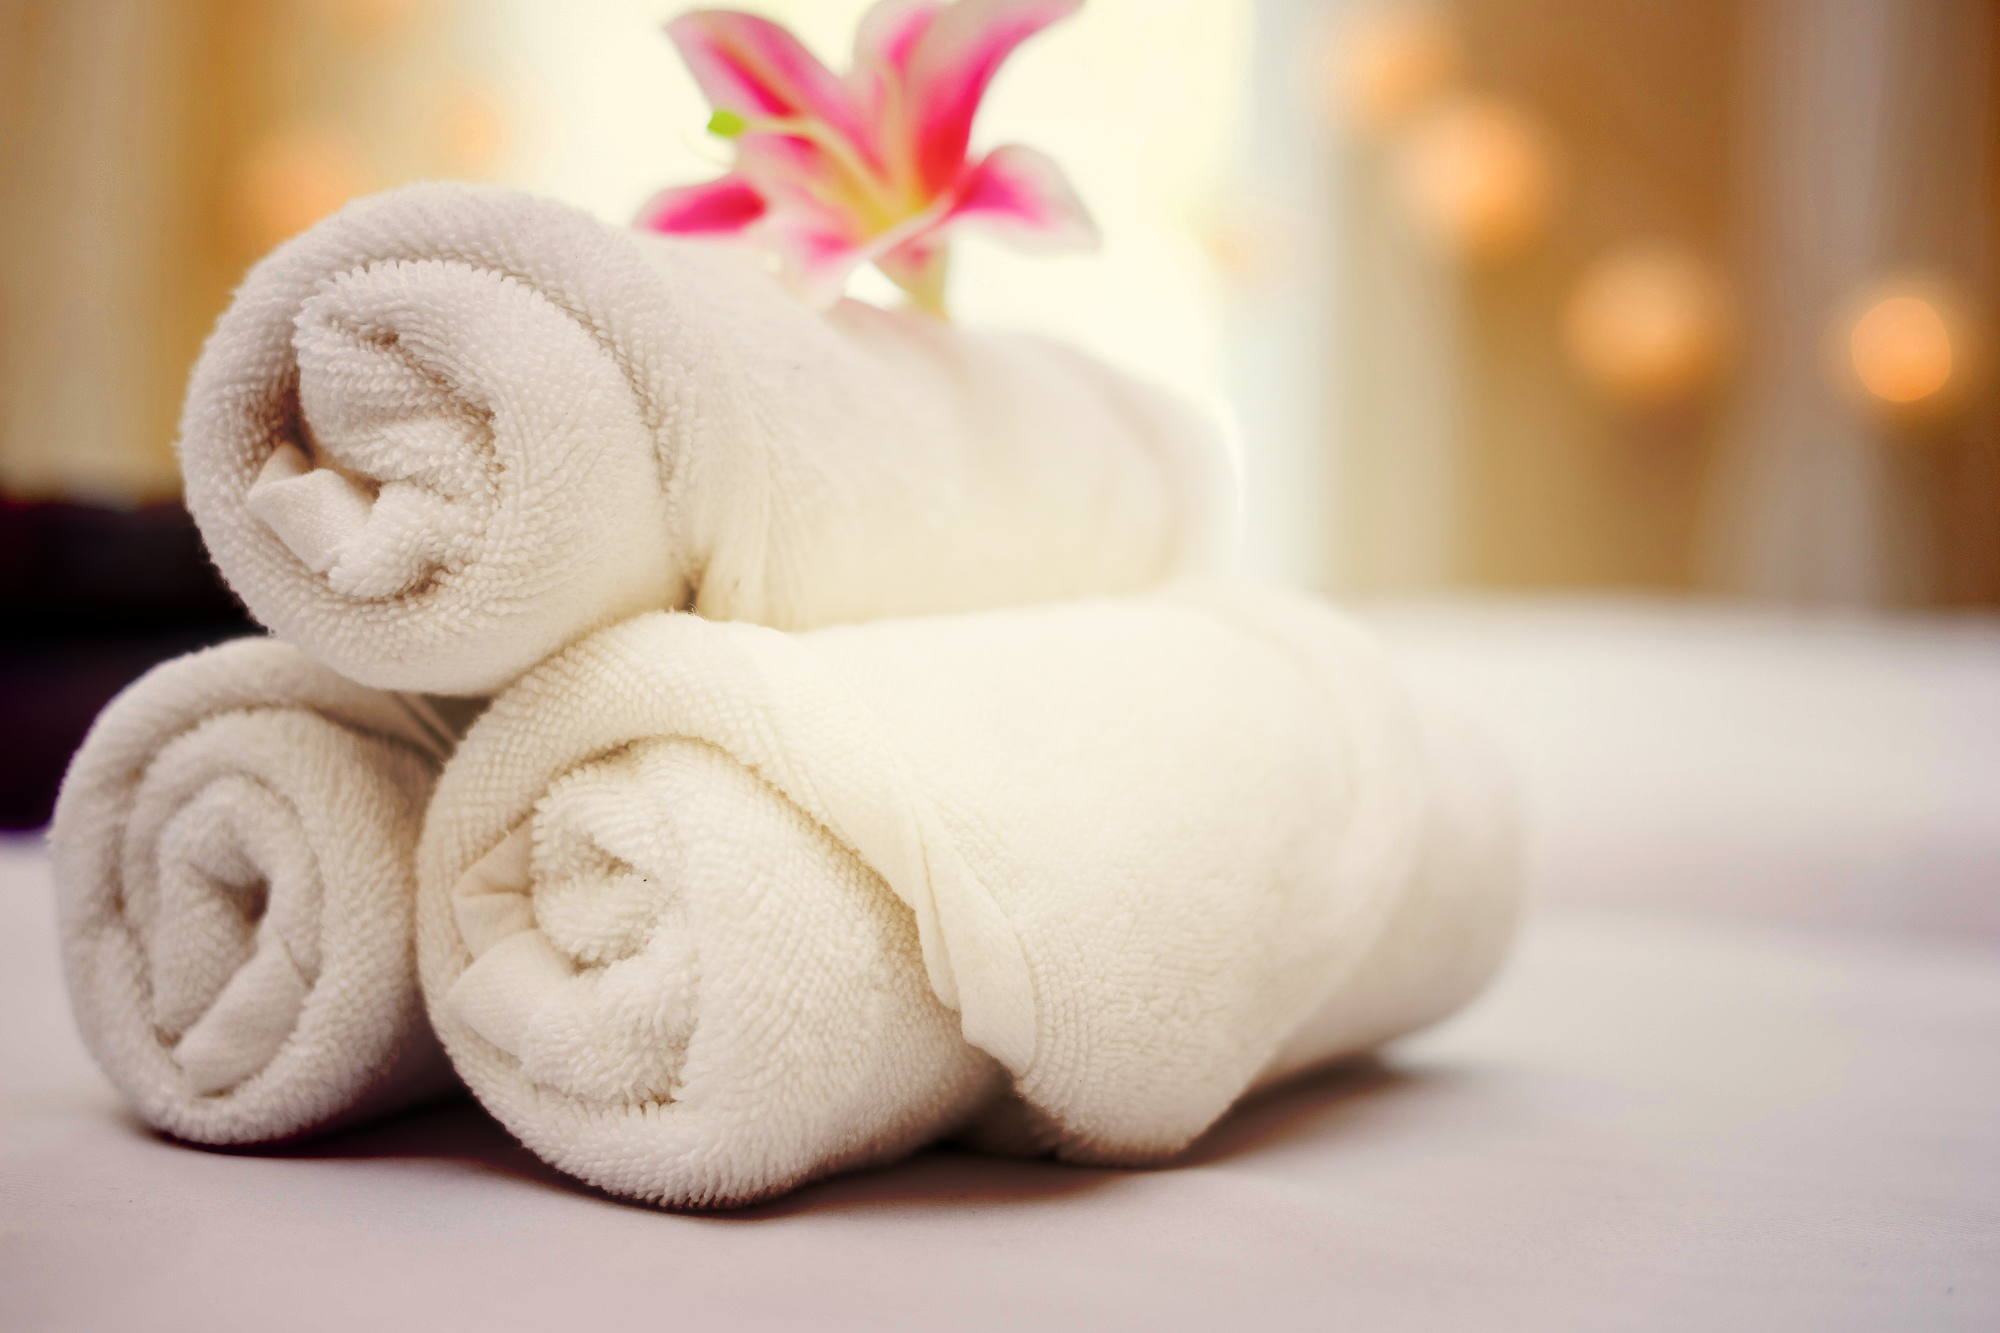 How to Buy Luxury Bathroom Towels? 8 Easy Tips